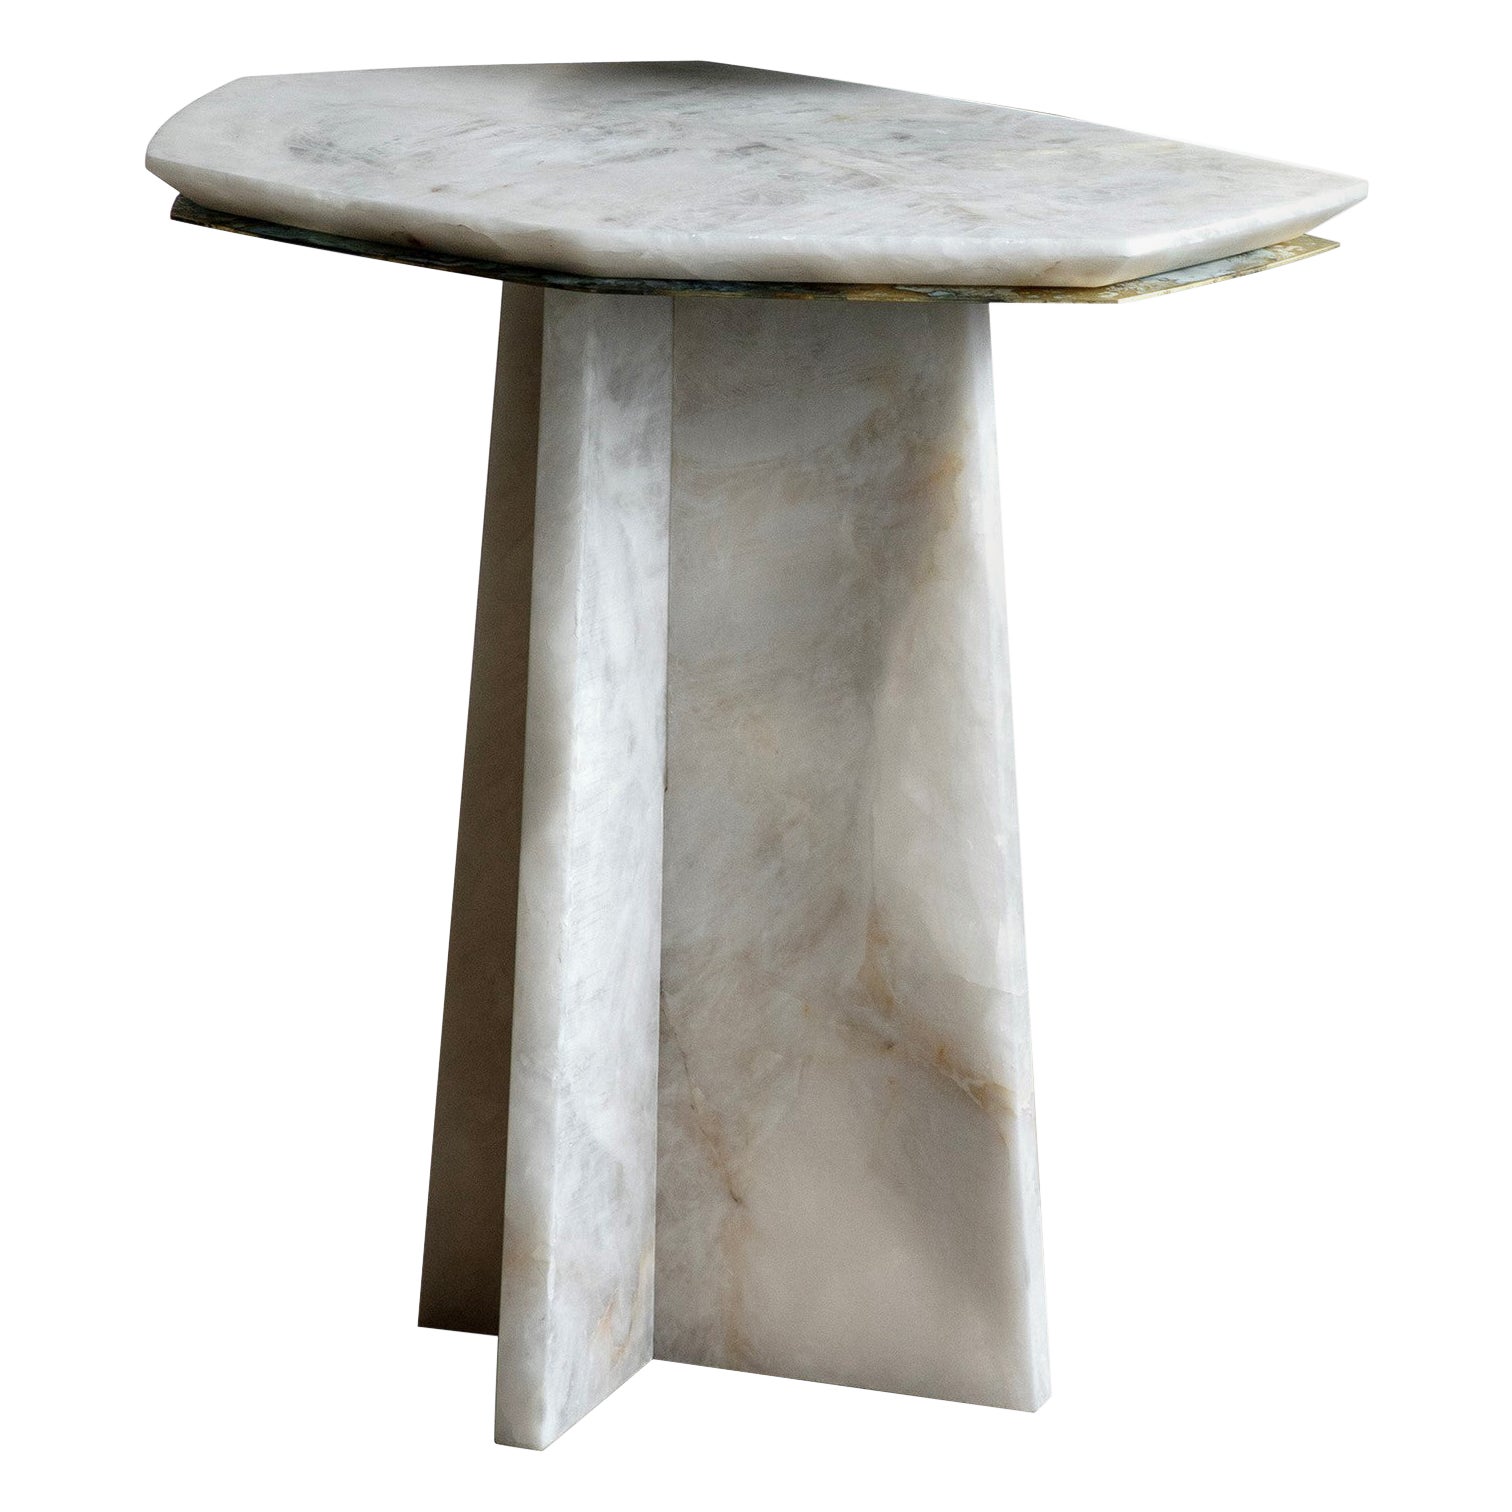 Small Geometrik Cantilever Coffee Table by Atra Design